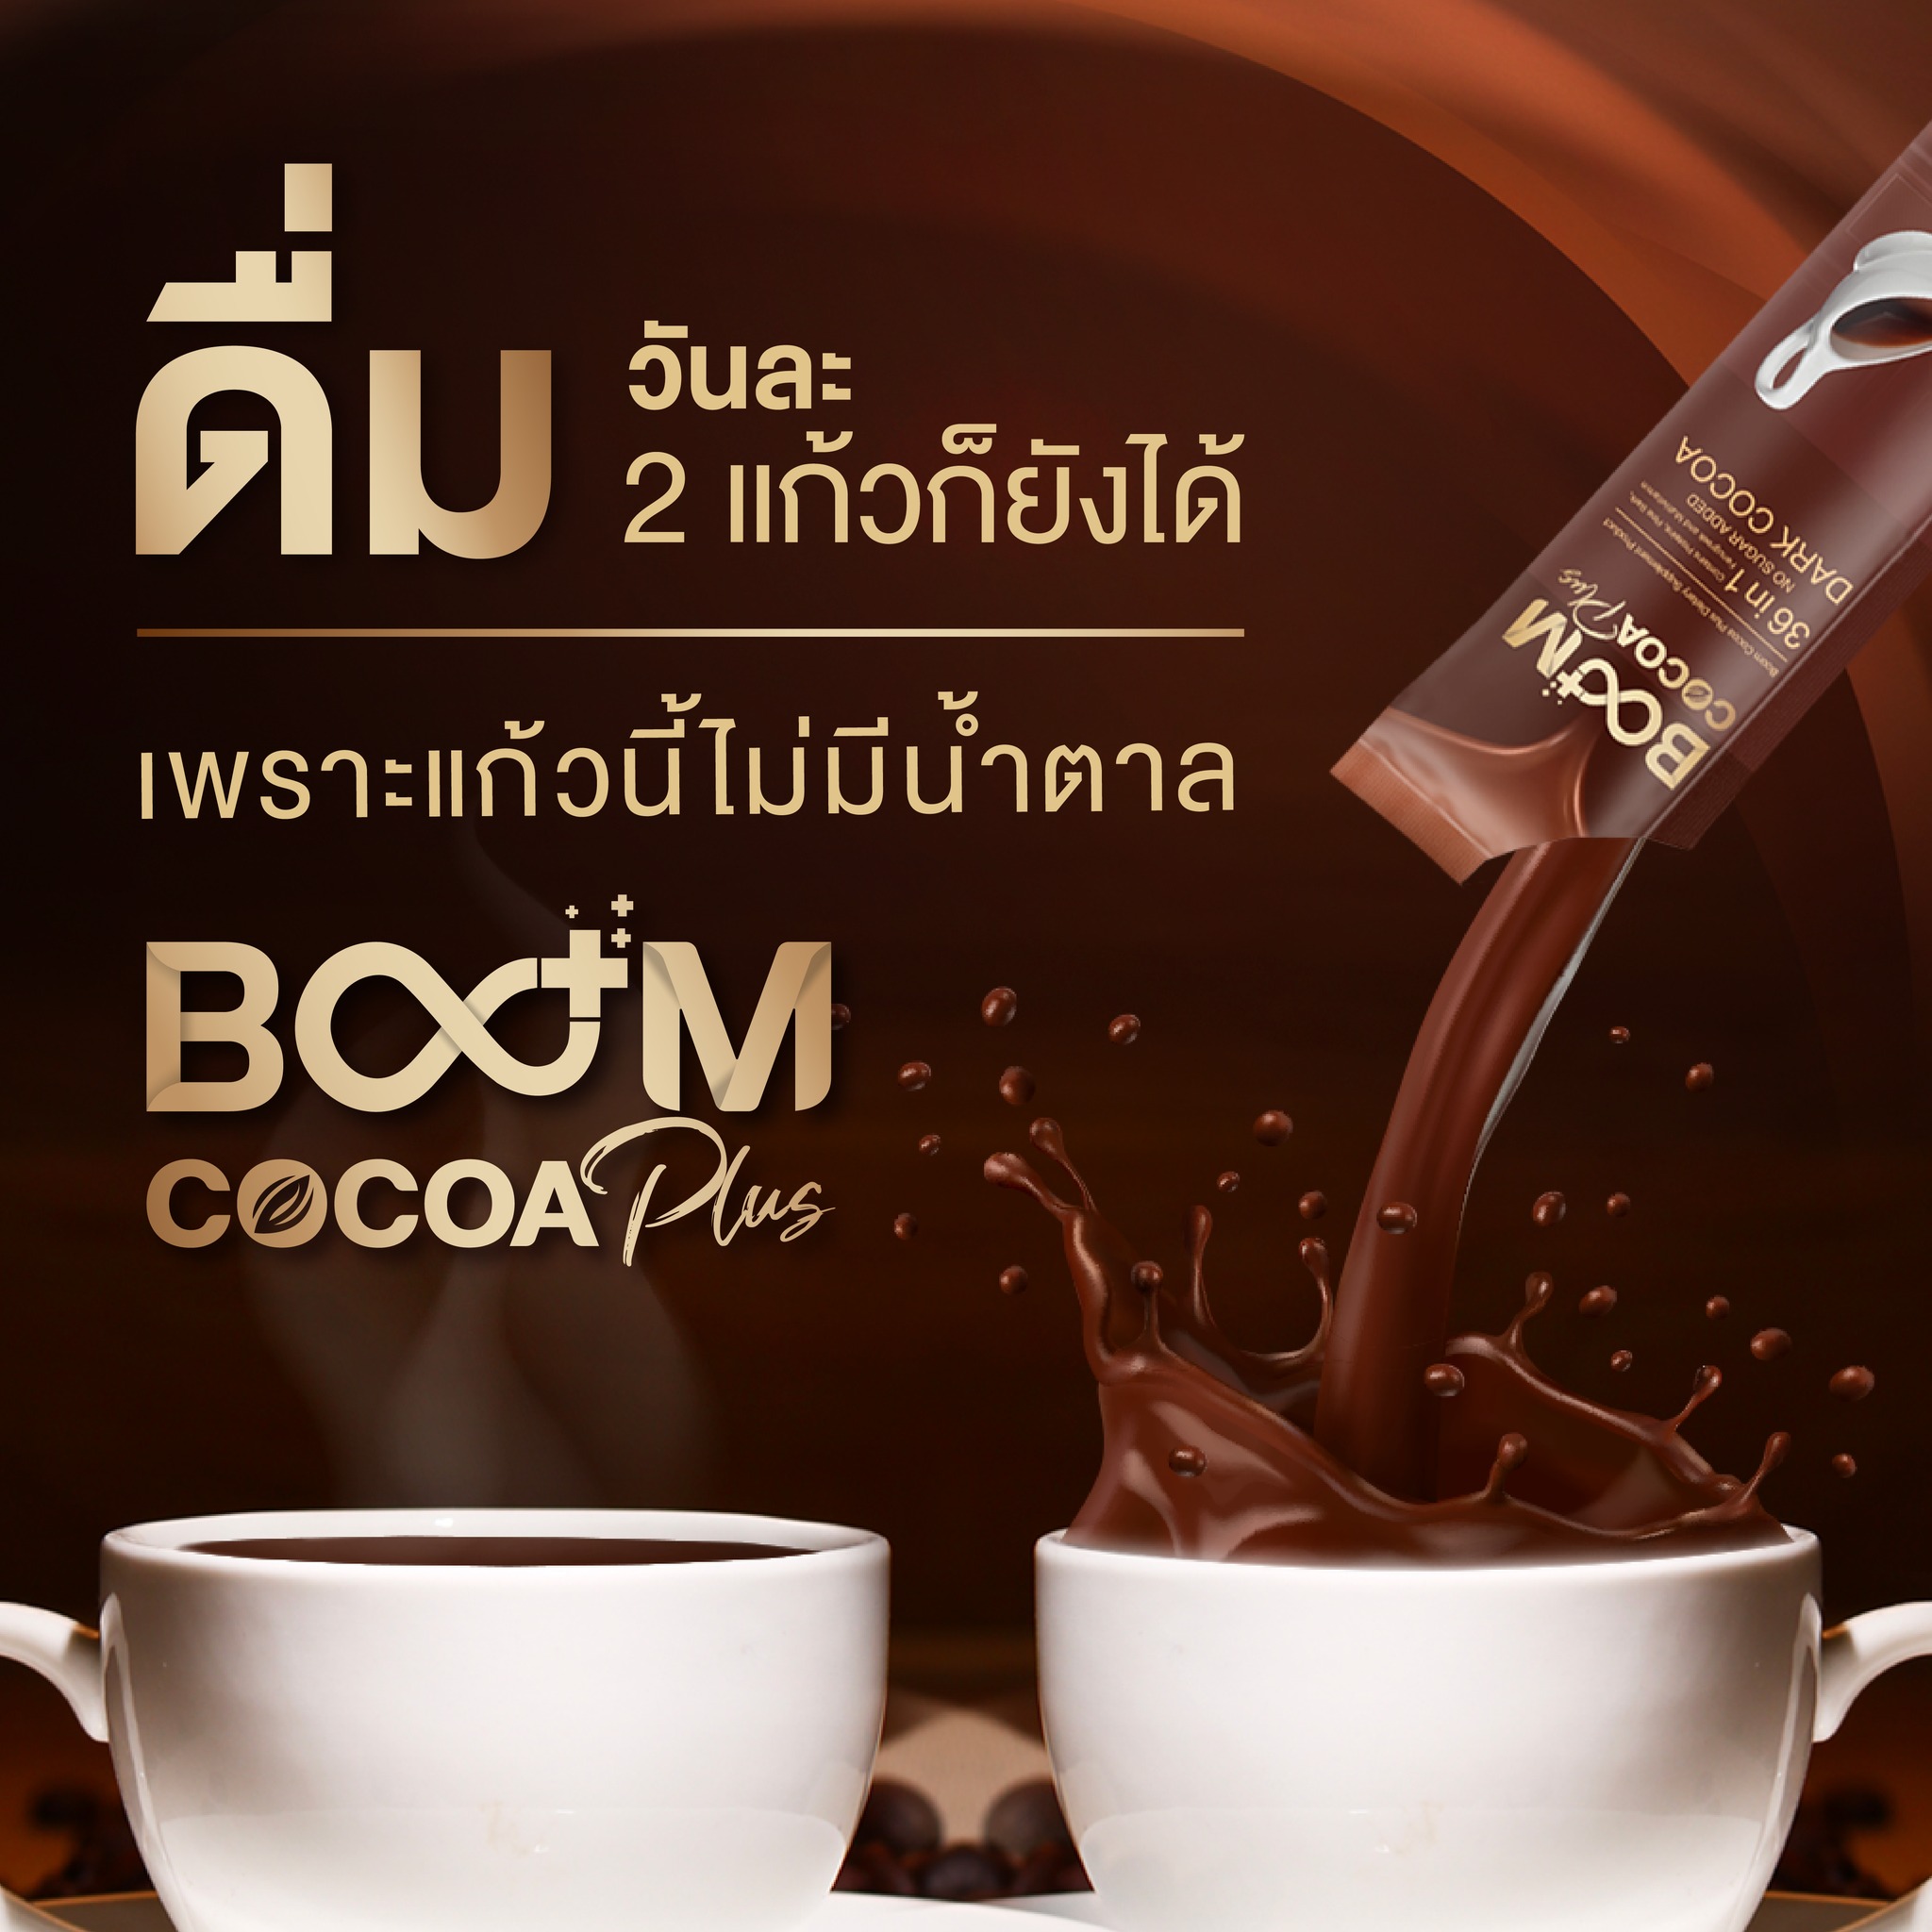 Boom Cocoa Plus ไม่มีน้ำตาล ดื่มวันละ 2 แก้วก็ยังได้